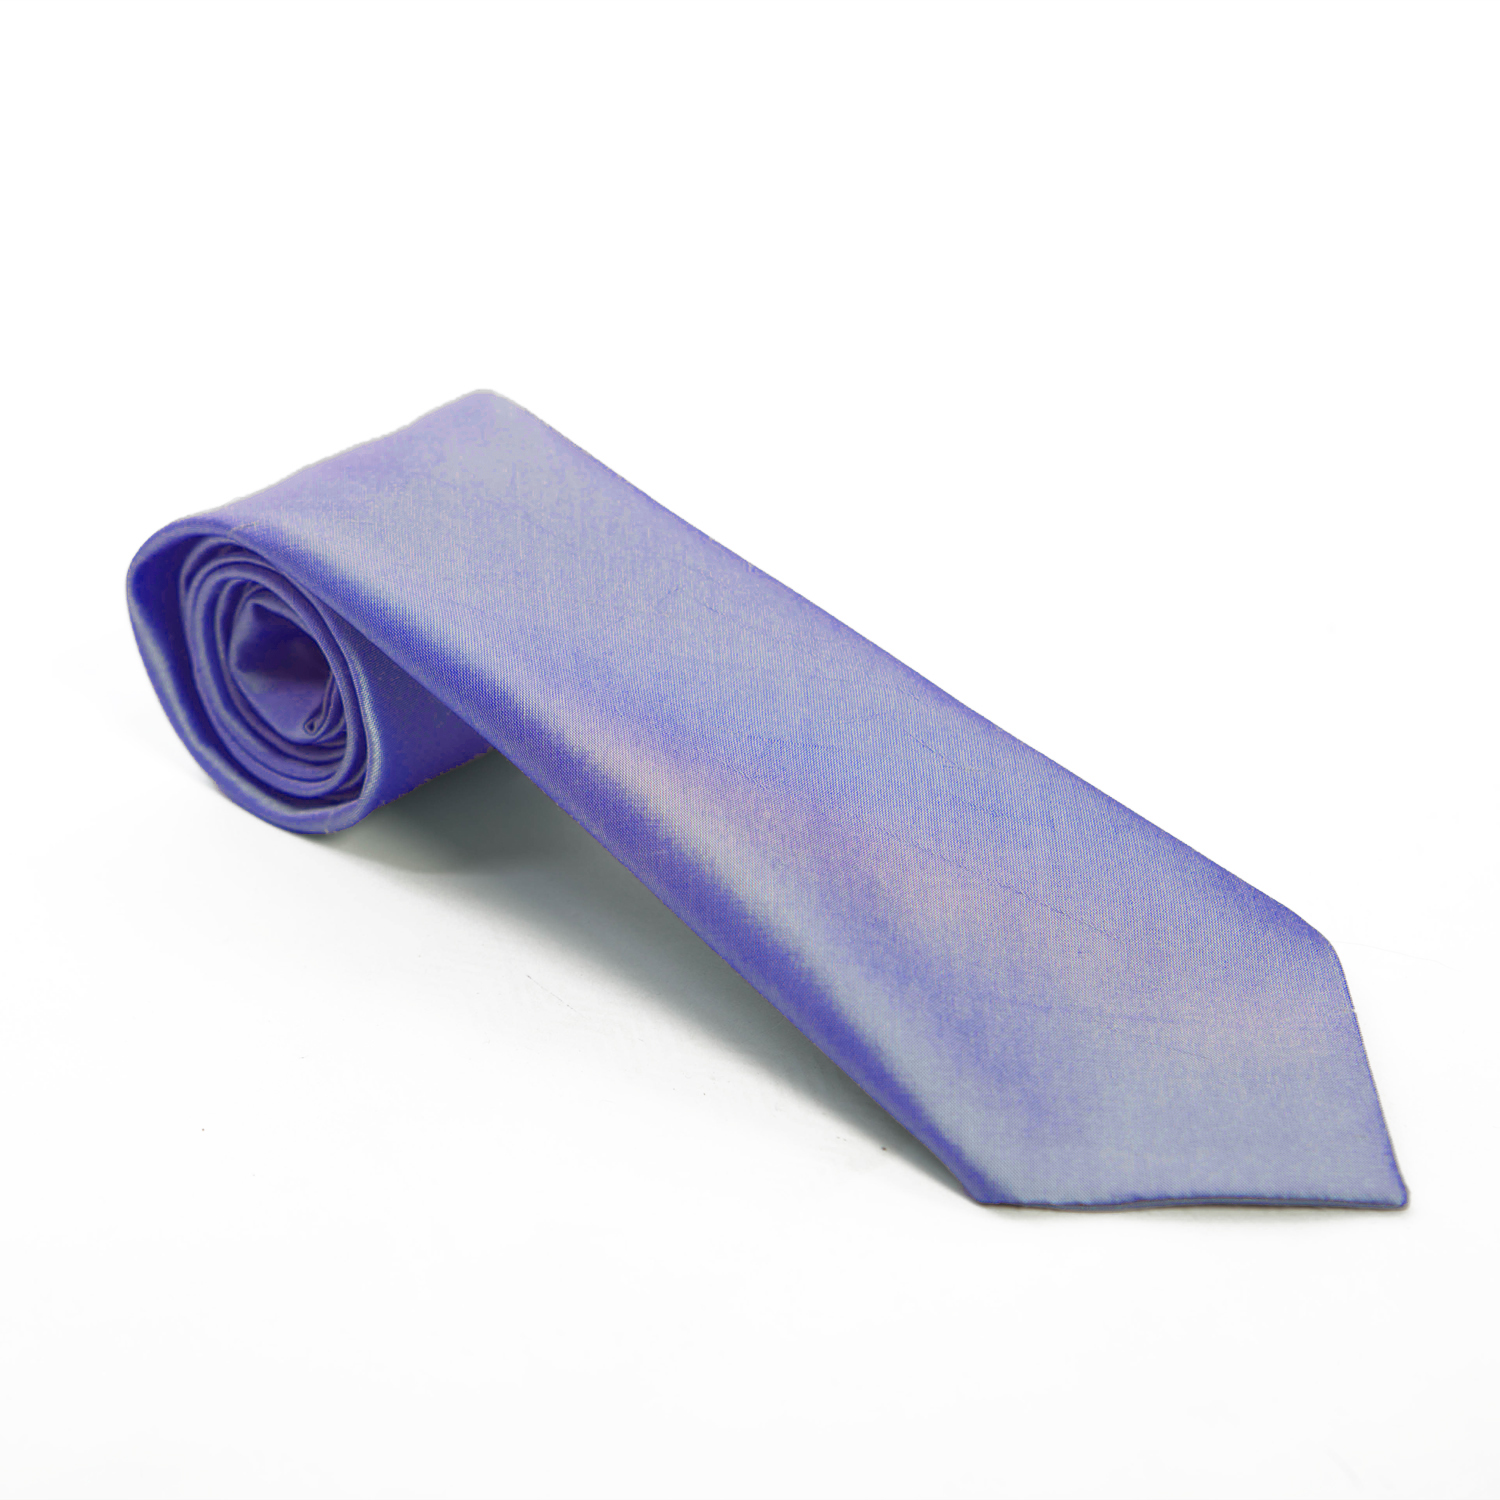 A lavender men's silk tie - The Little Wedding Company